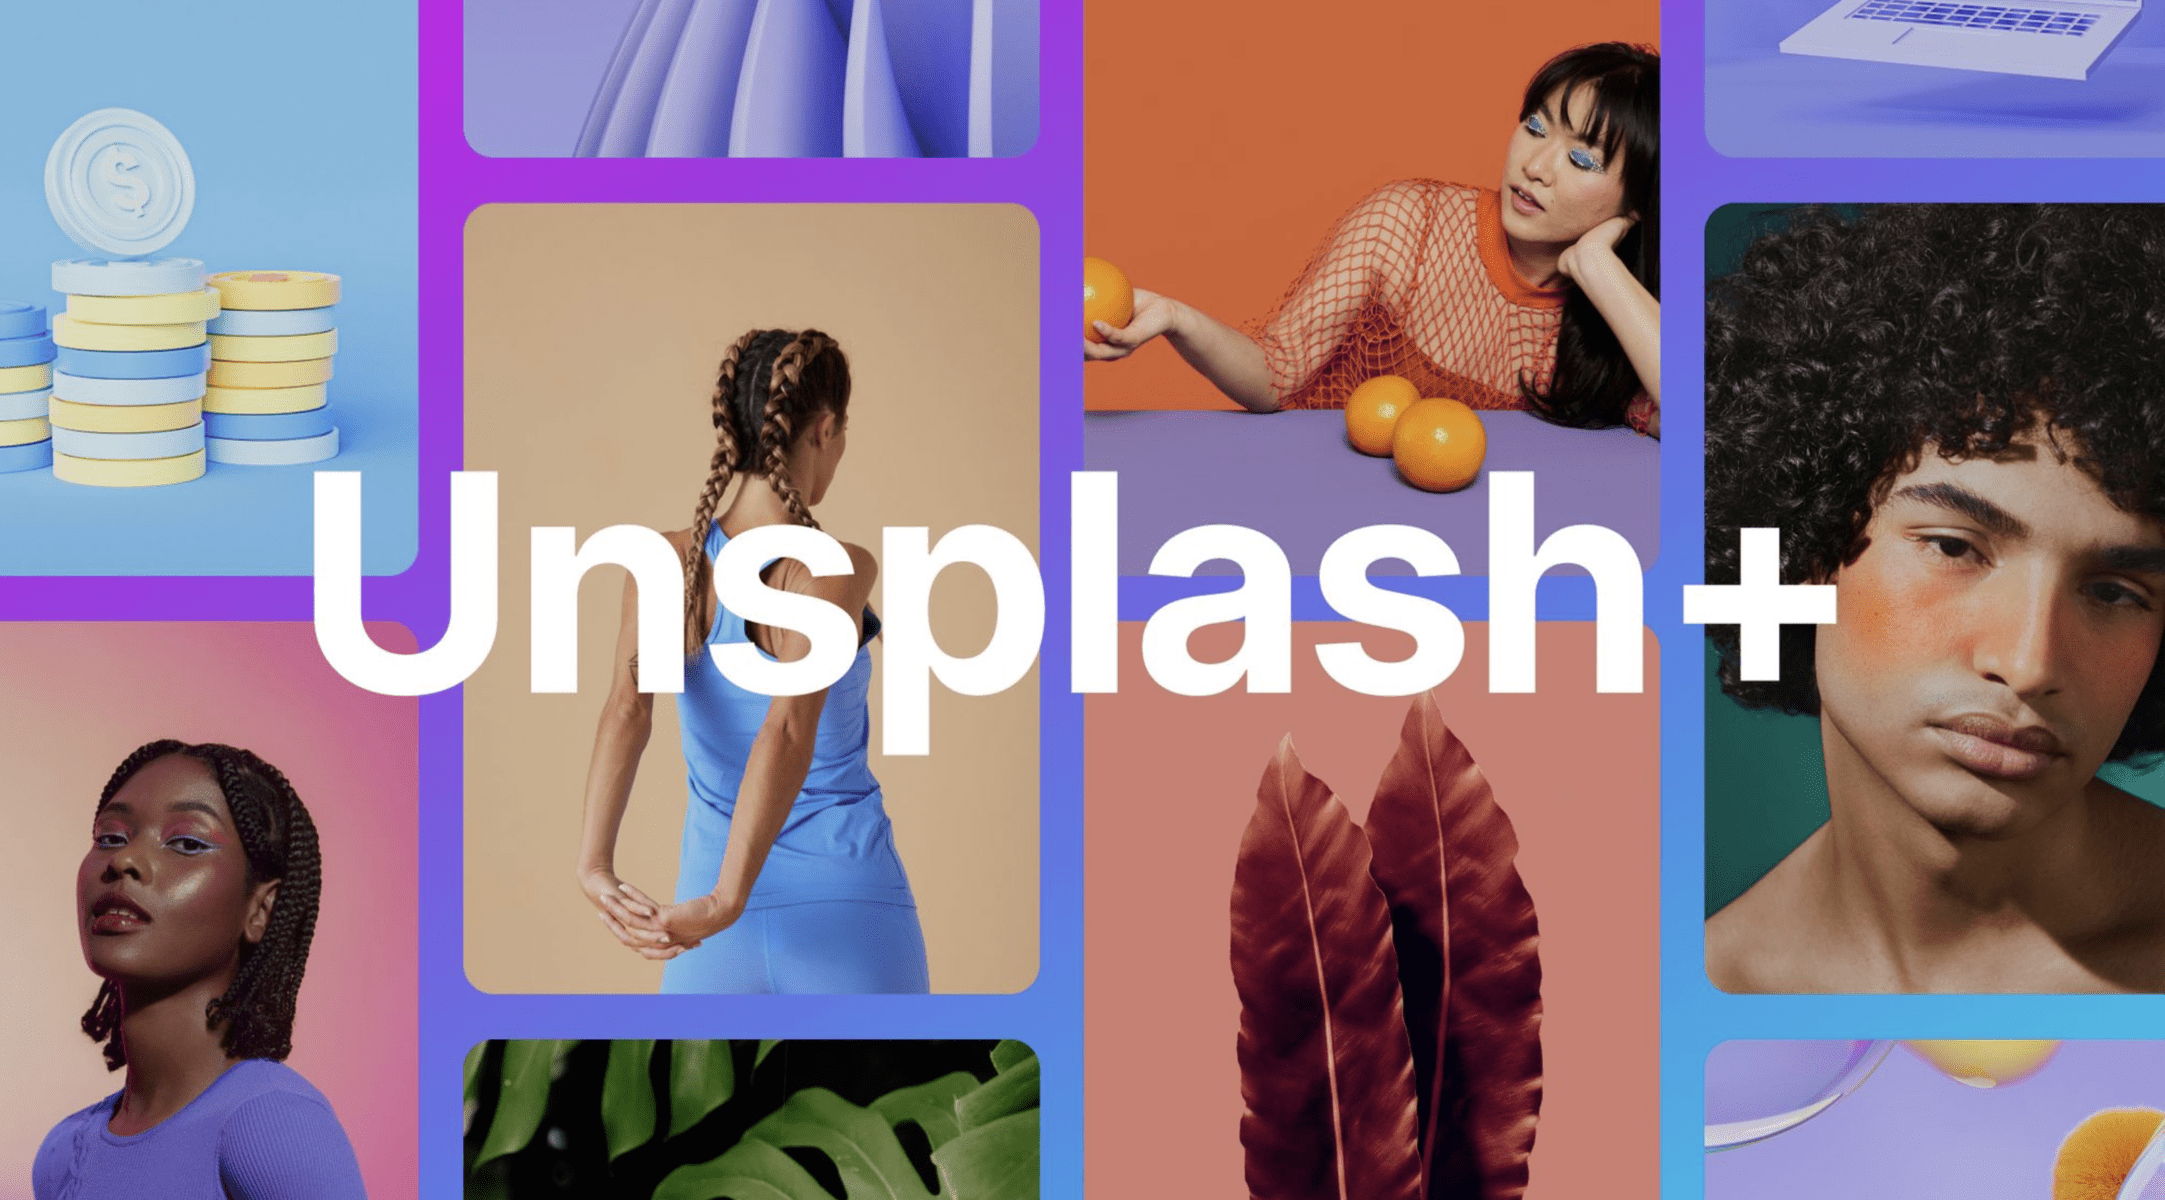  Unsplash متعلق به Getty اشتراک جدید Unsplash+ را راه اندازی کرد